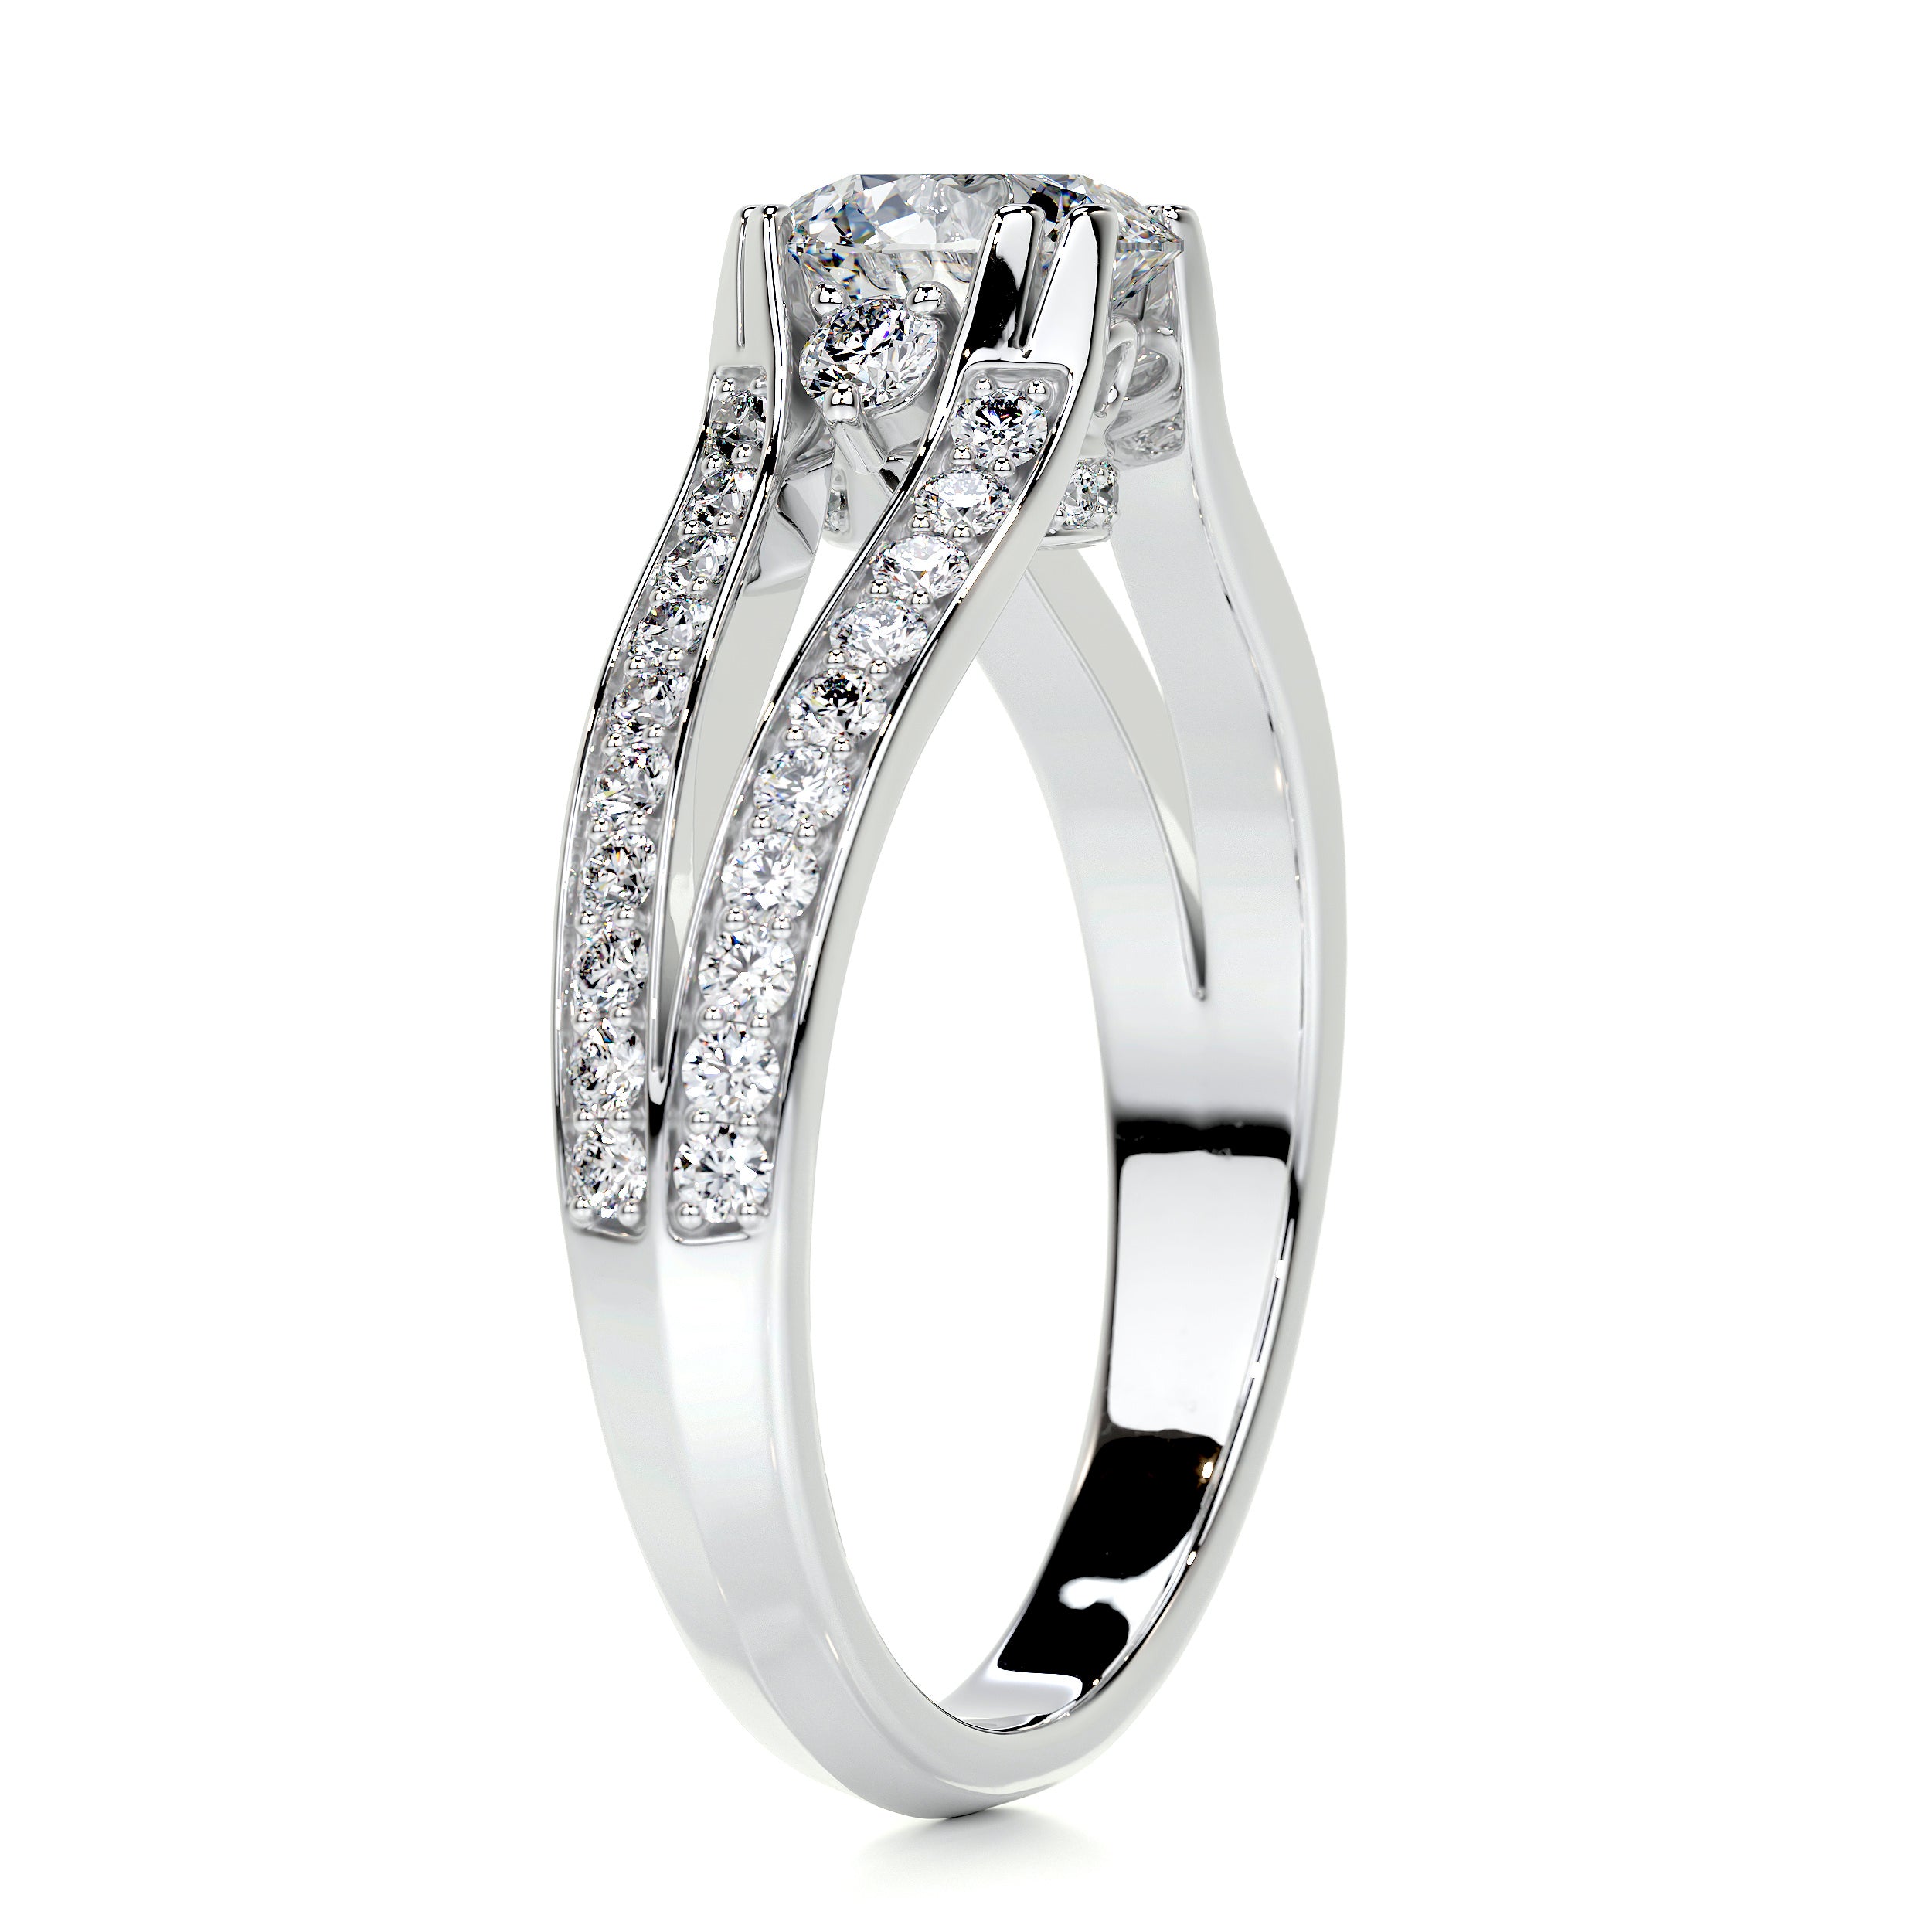 Alex Diamond Engagement Ring   (1.5 Carat) -18K White Gold